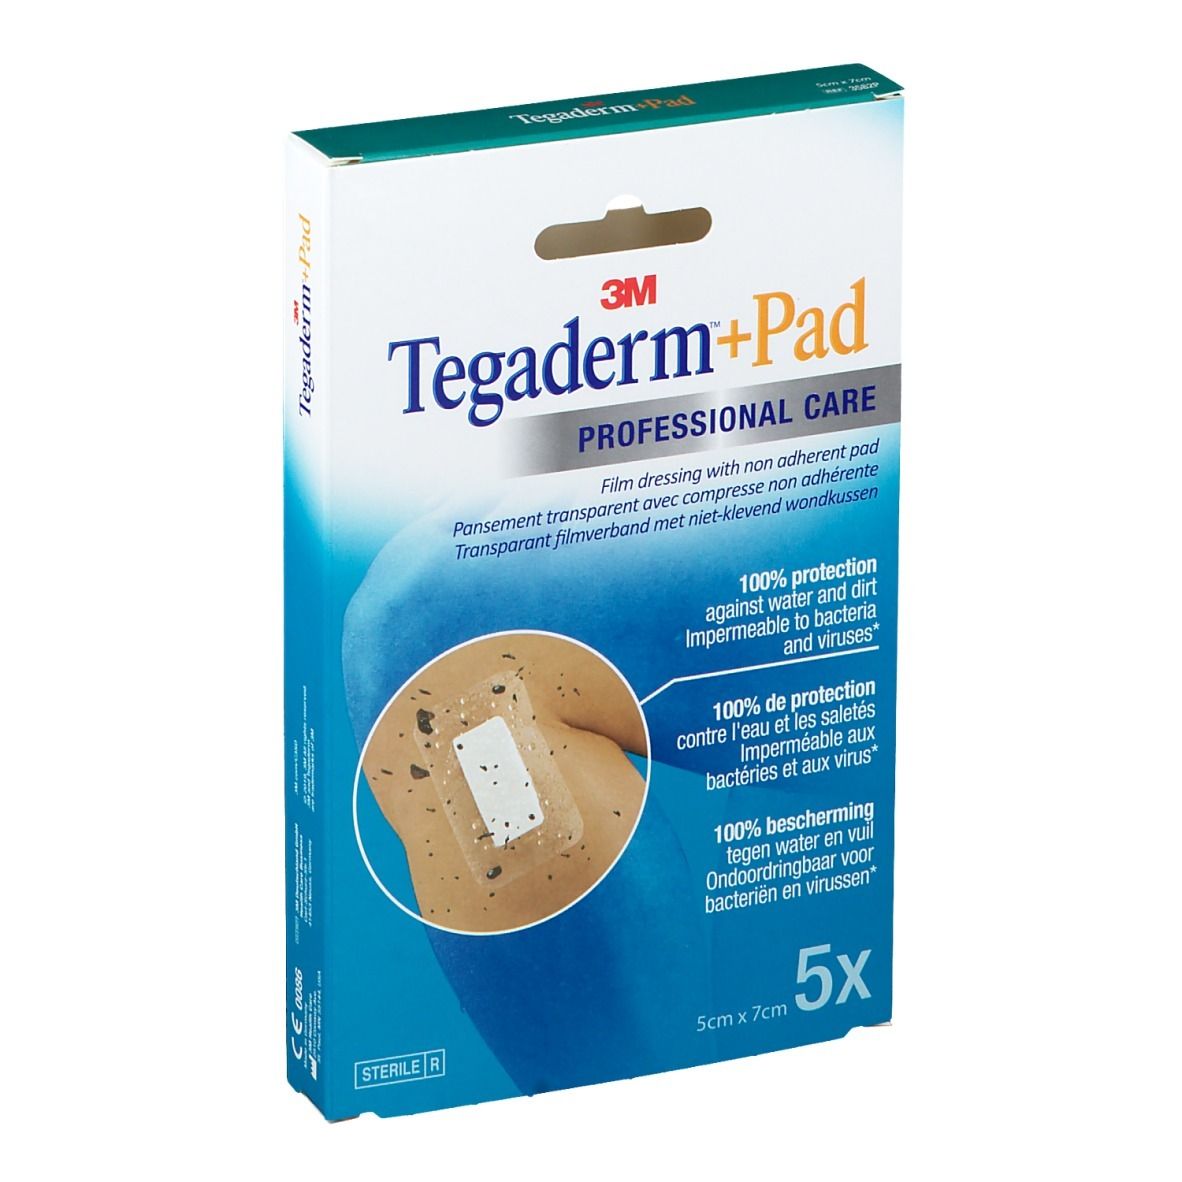 3M Tegaderm + Pad Professional Care